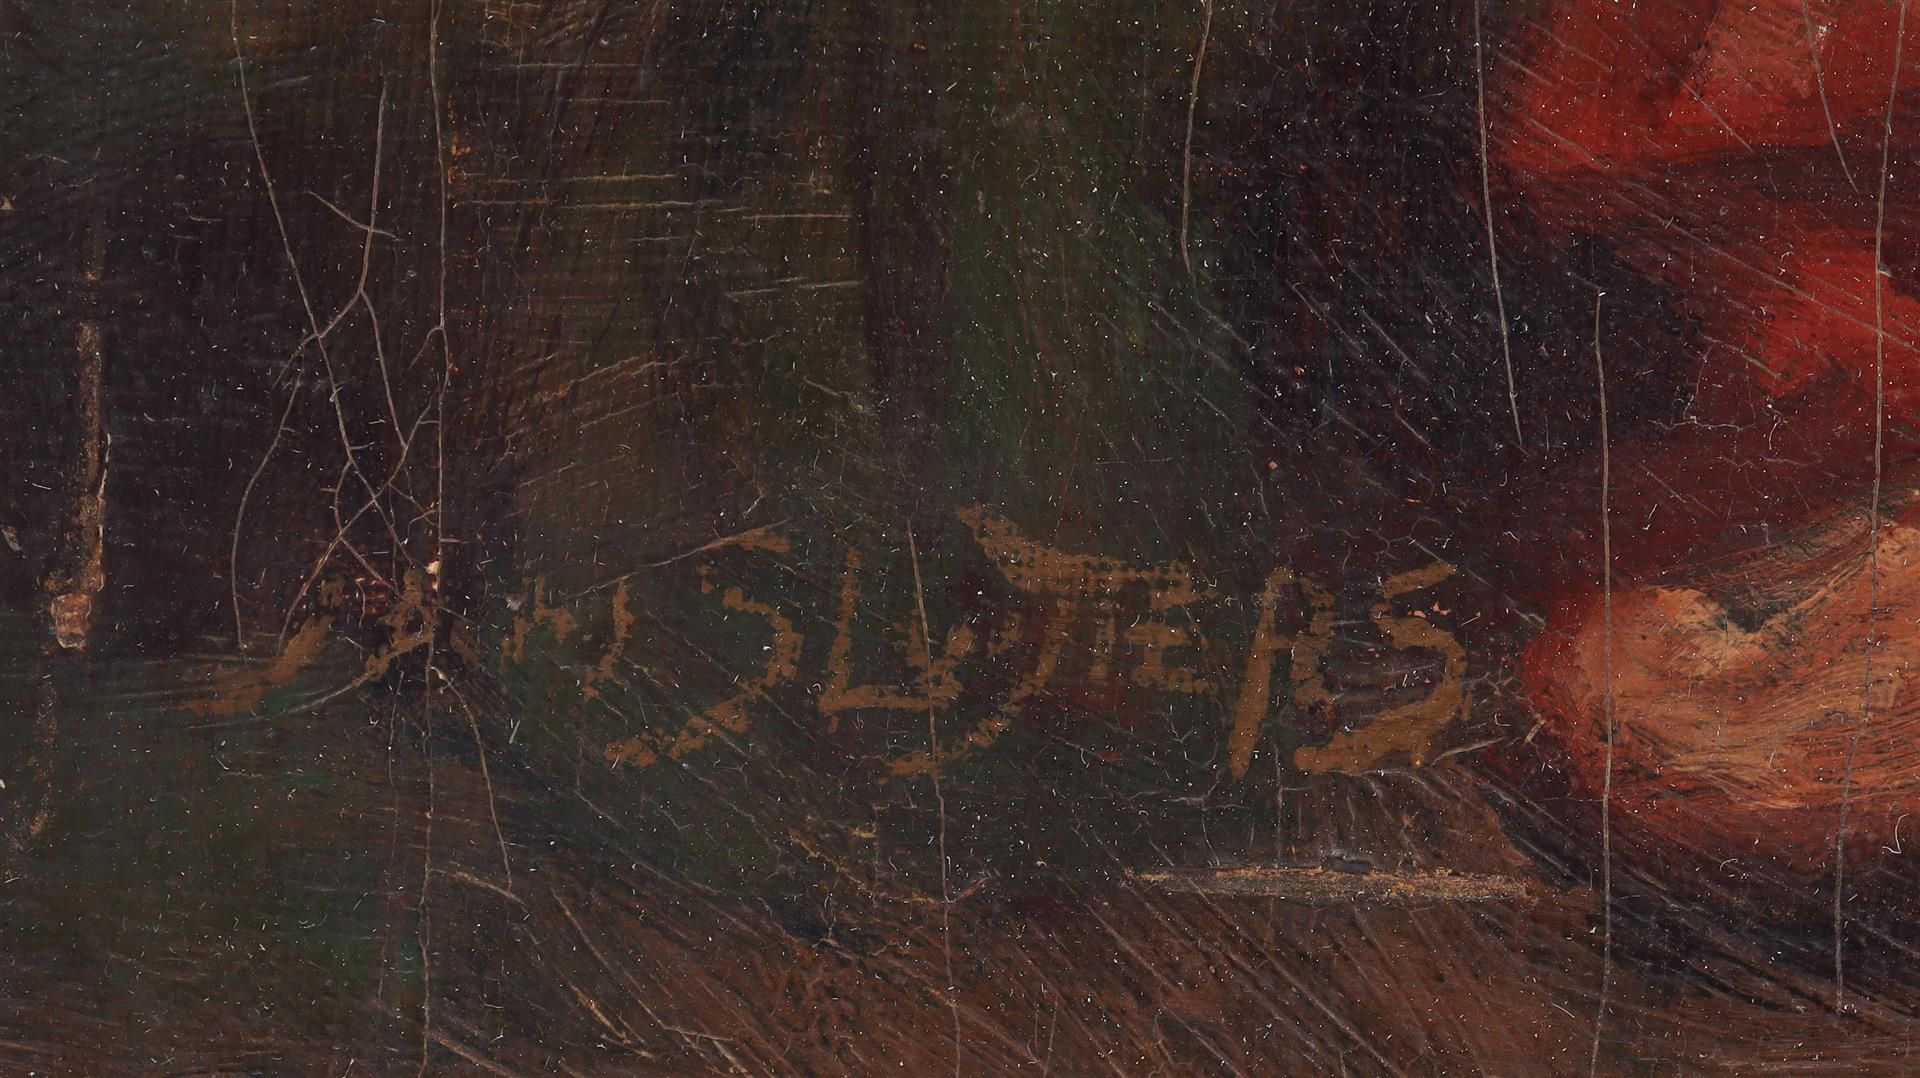 With signature, Sluijters - Image 3 of 4